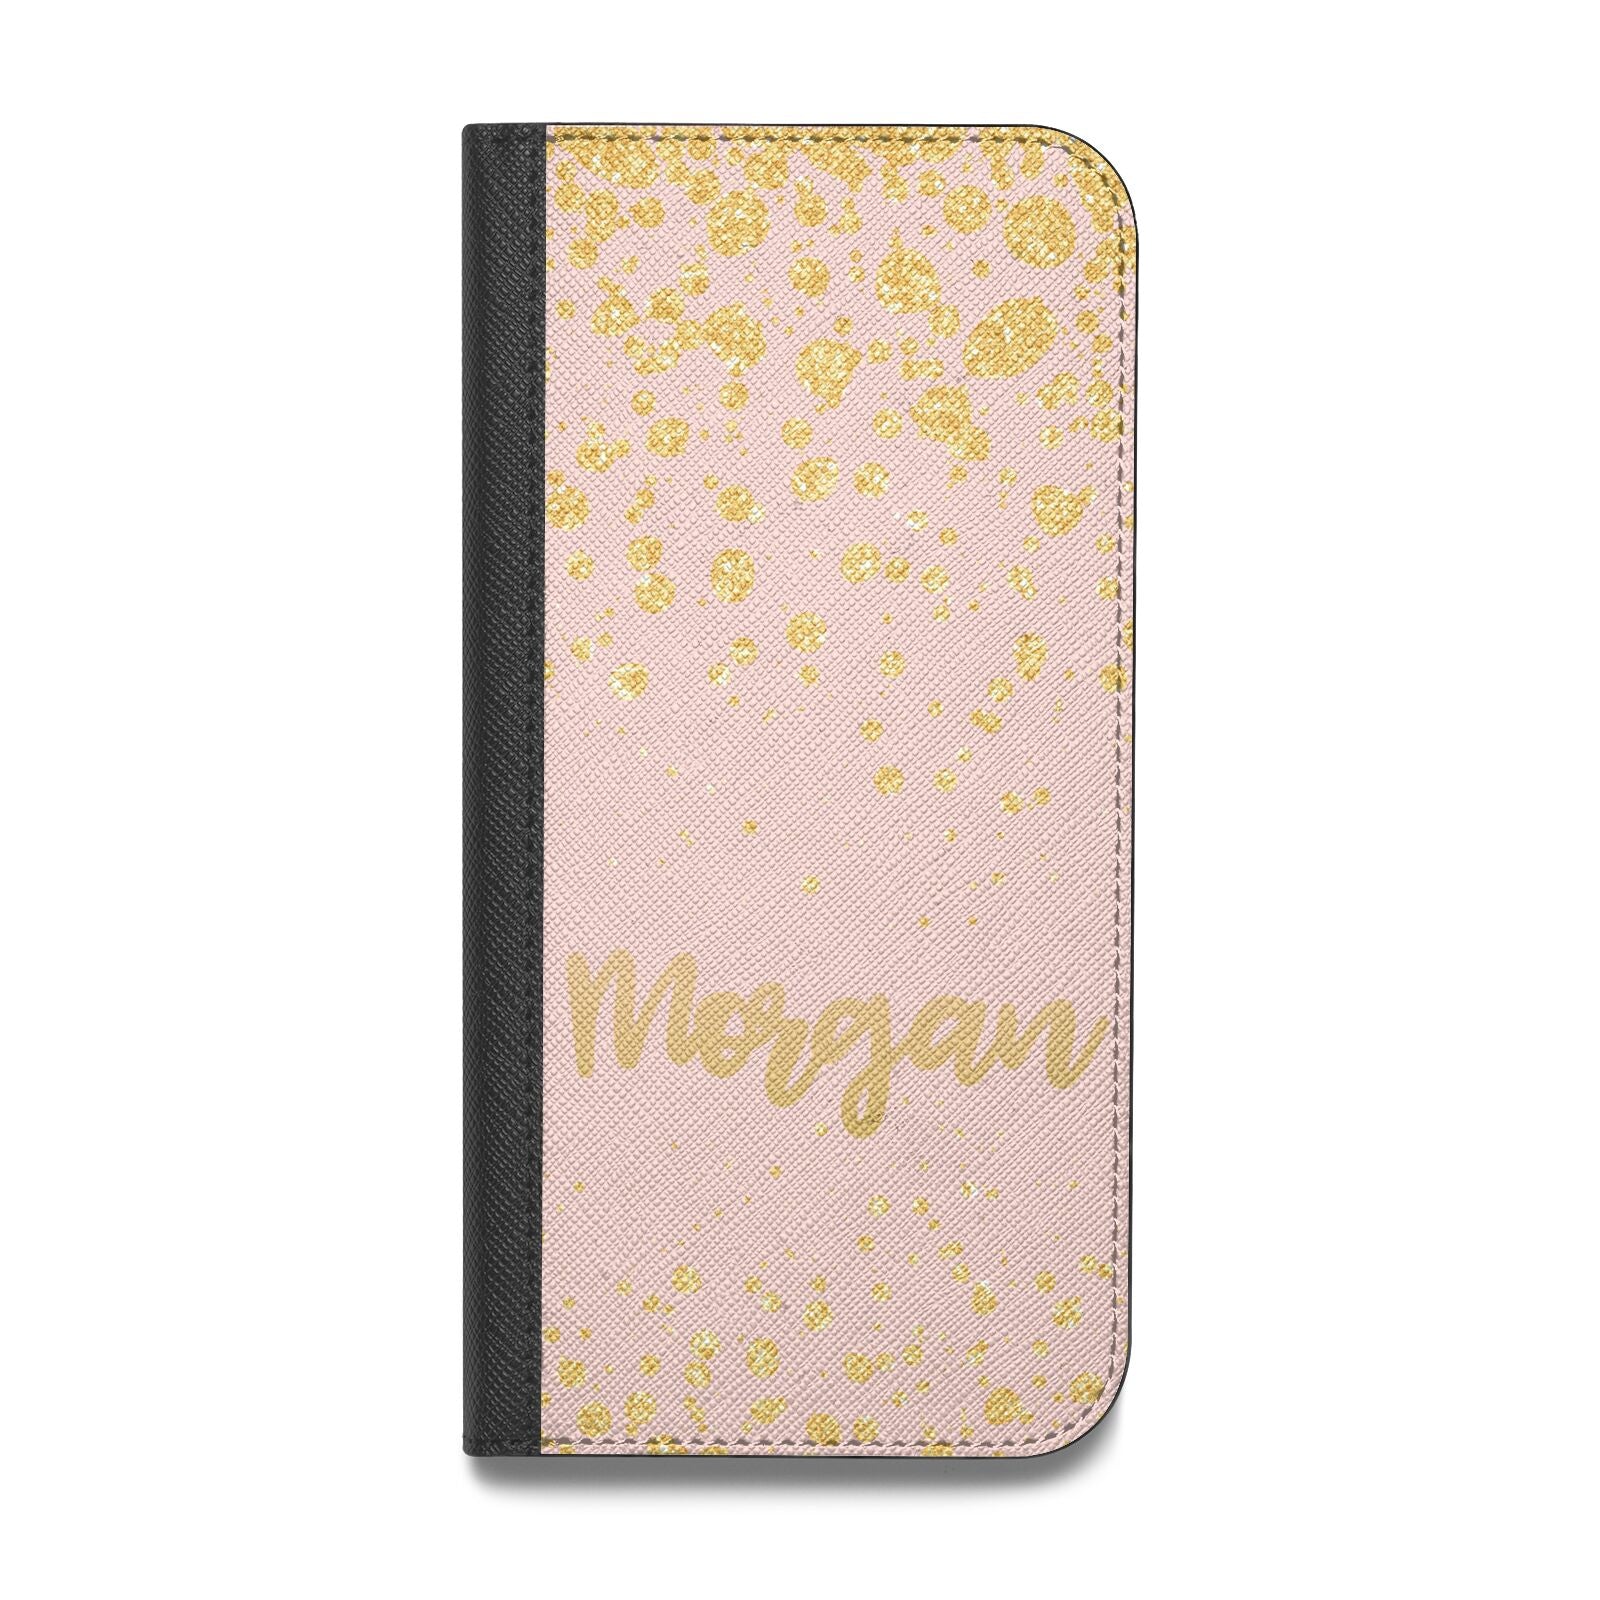 Personalised Pink Gold Splatter With Name Vegan Leather Flip Samsung Case